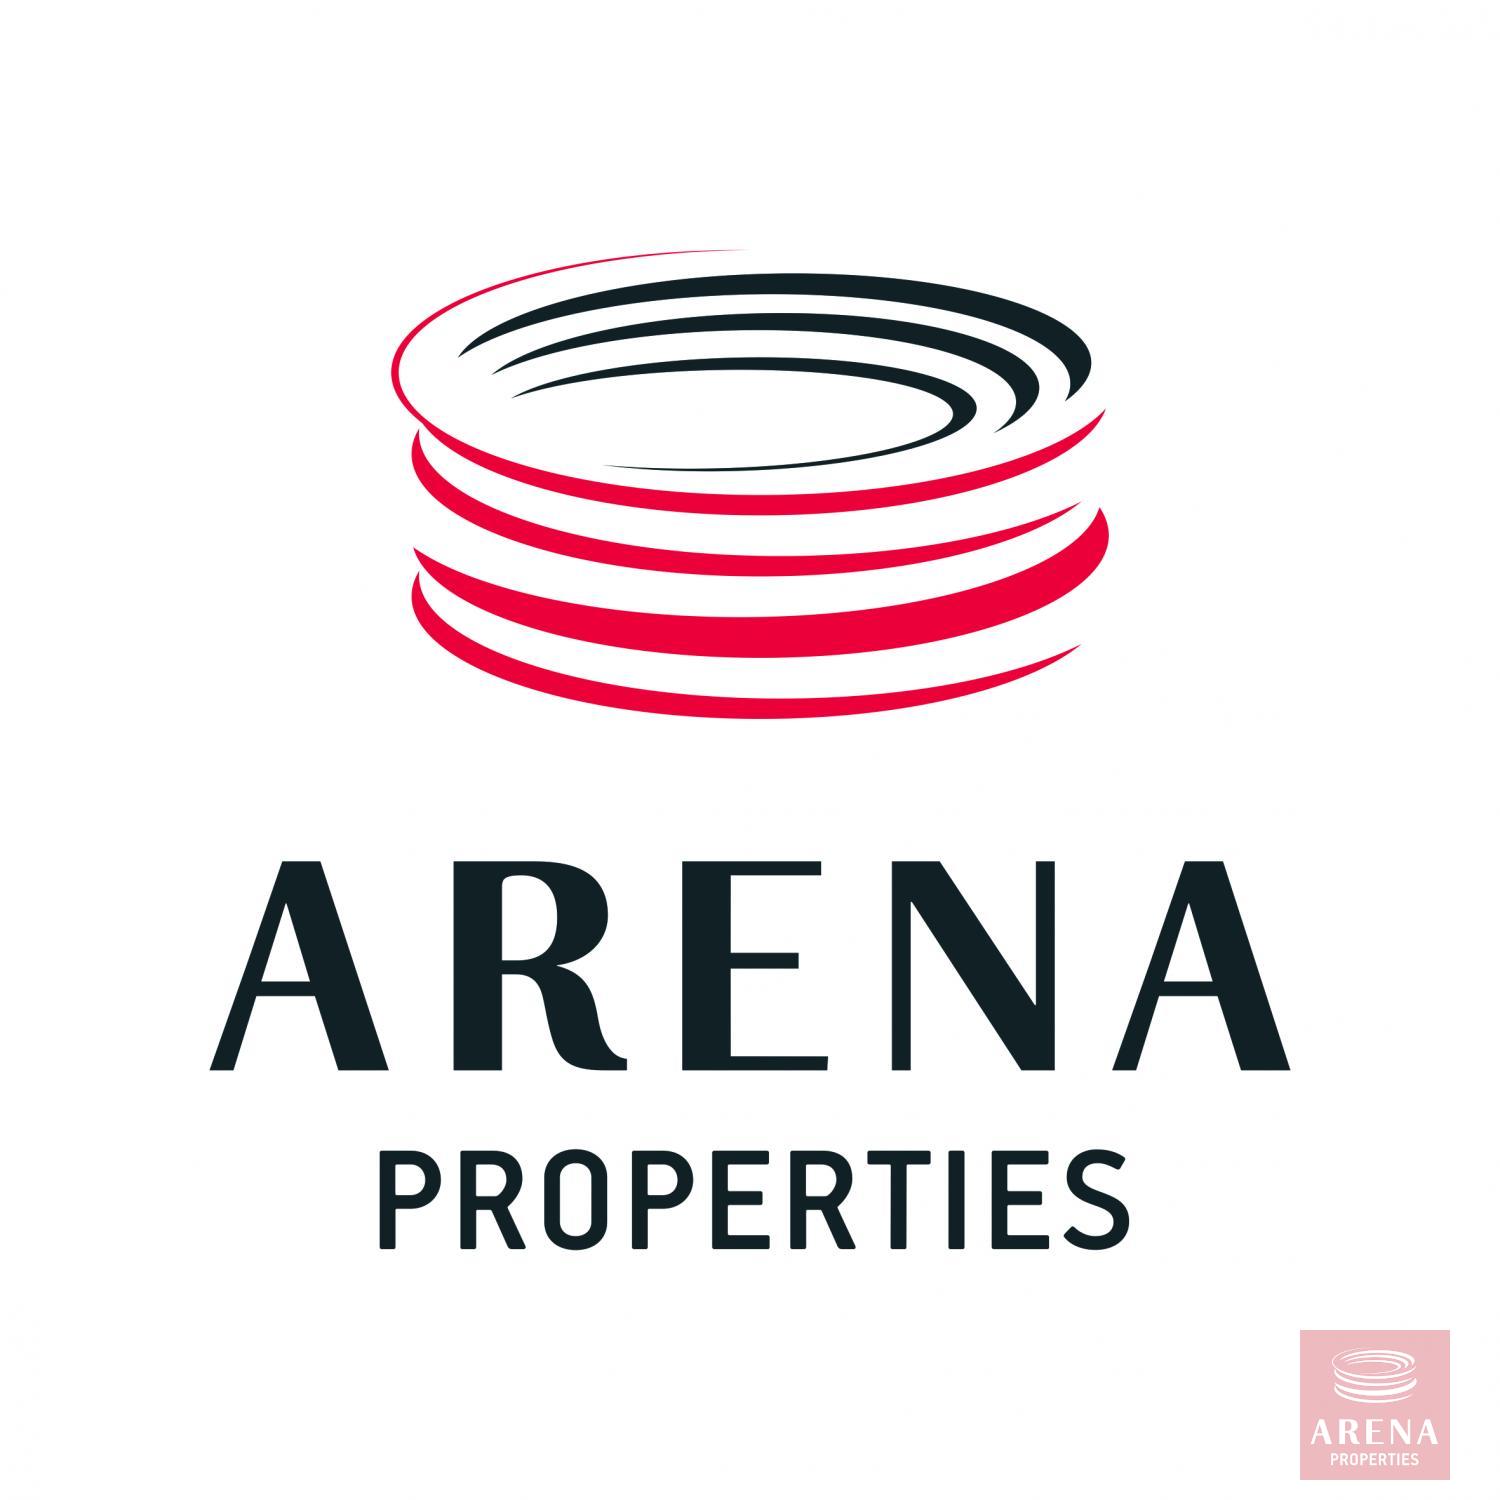 arena properties logo white 12